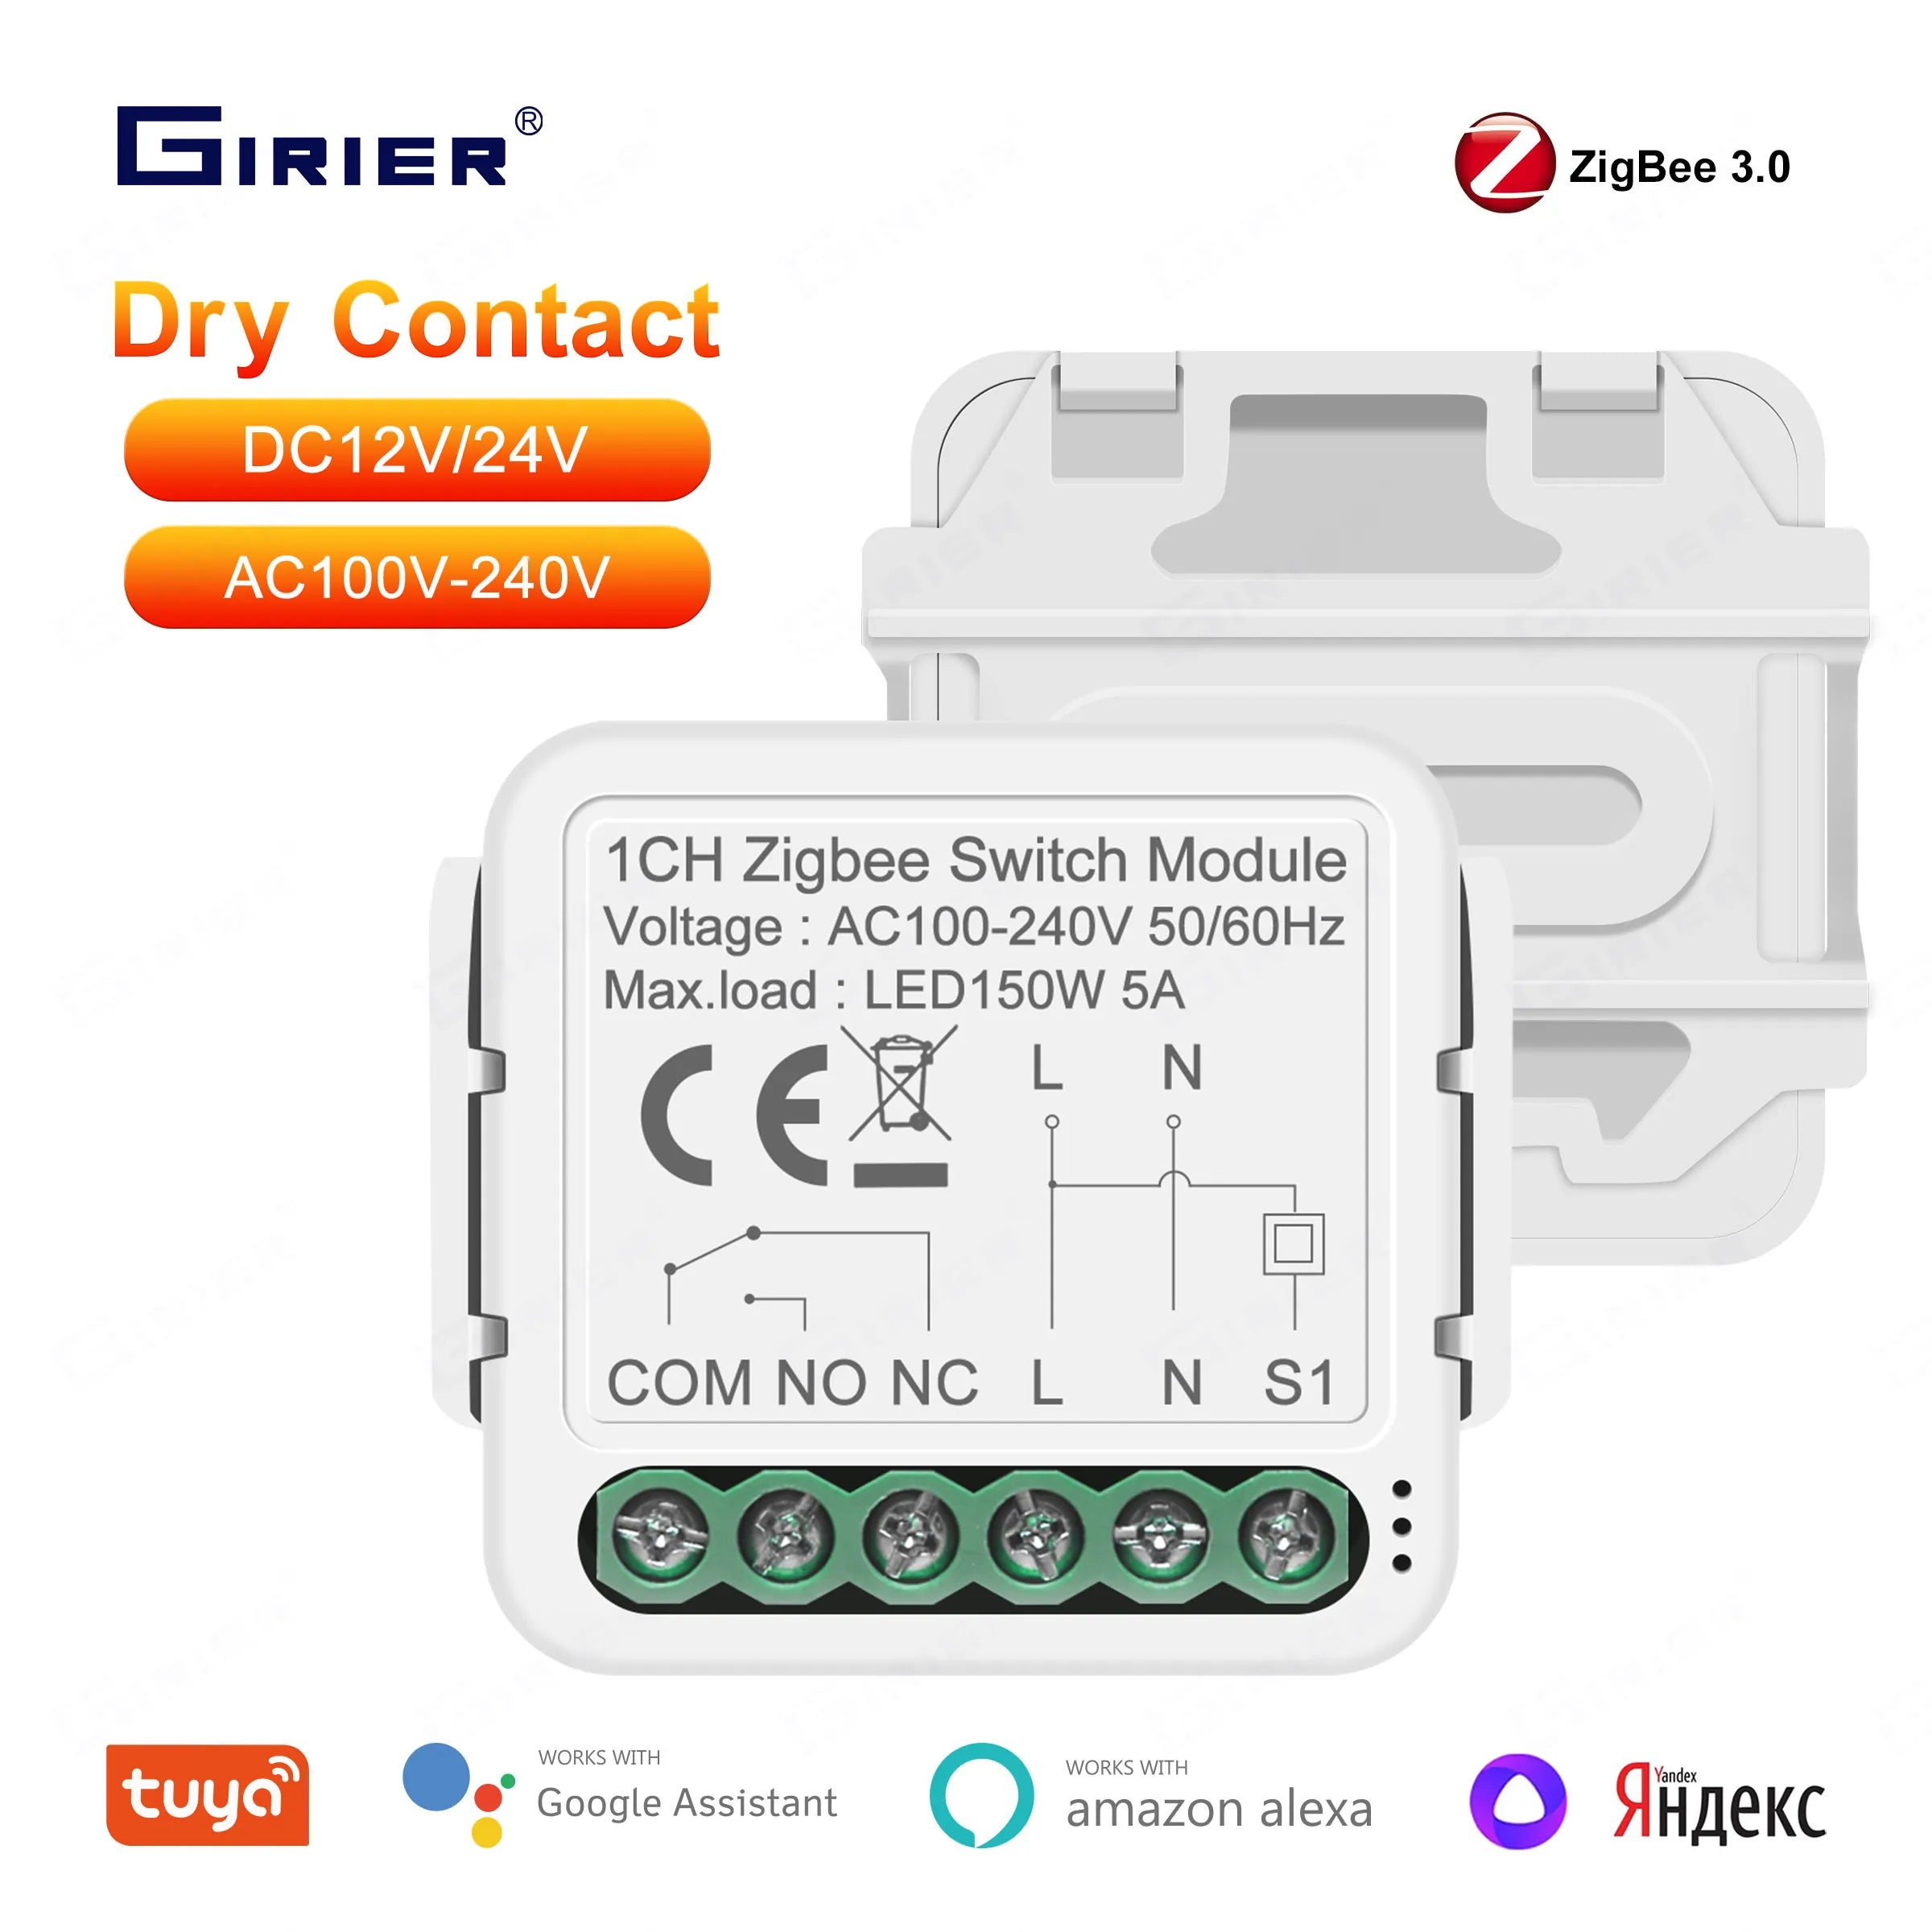 GIRIER Smart ZigBee Switch Module Dry Contact 5A Universal Breaker Relay DC 12/24V AC 100-240V Works with Alexa Alice Hey Google